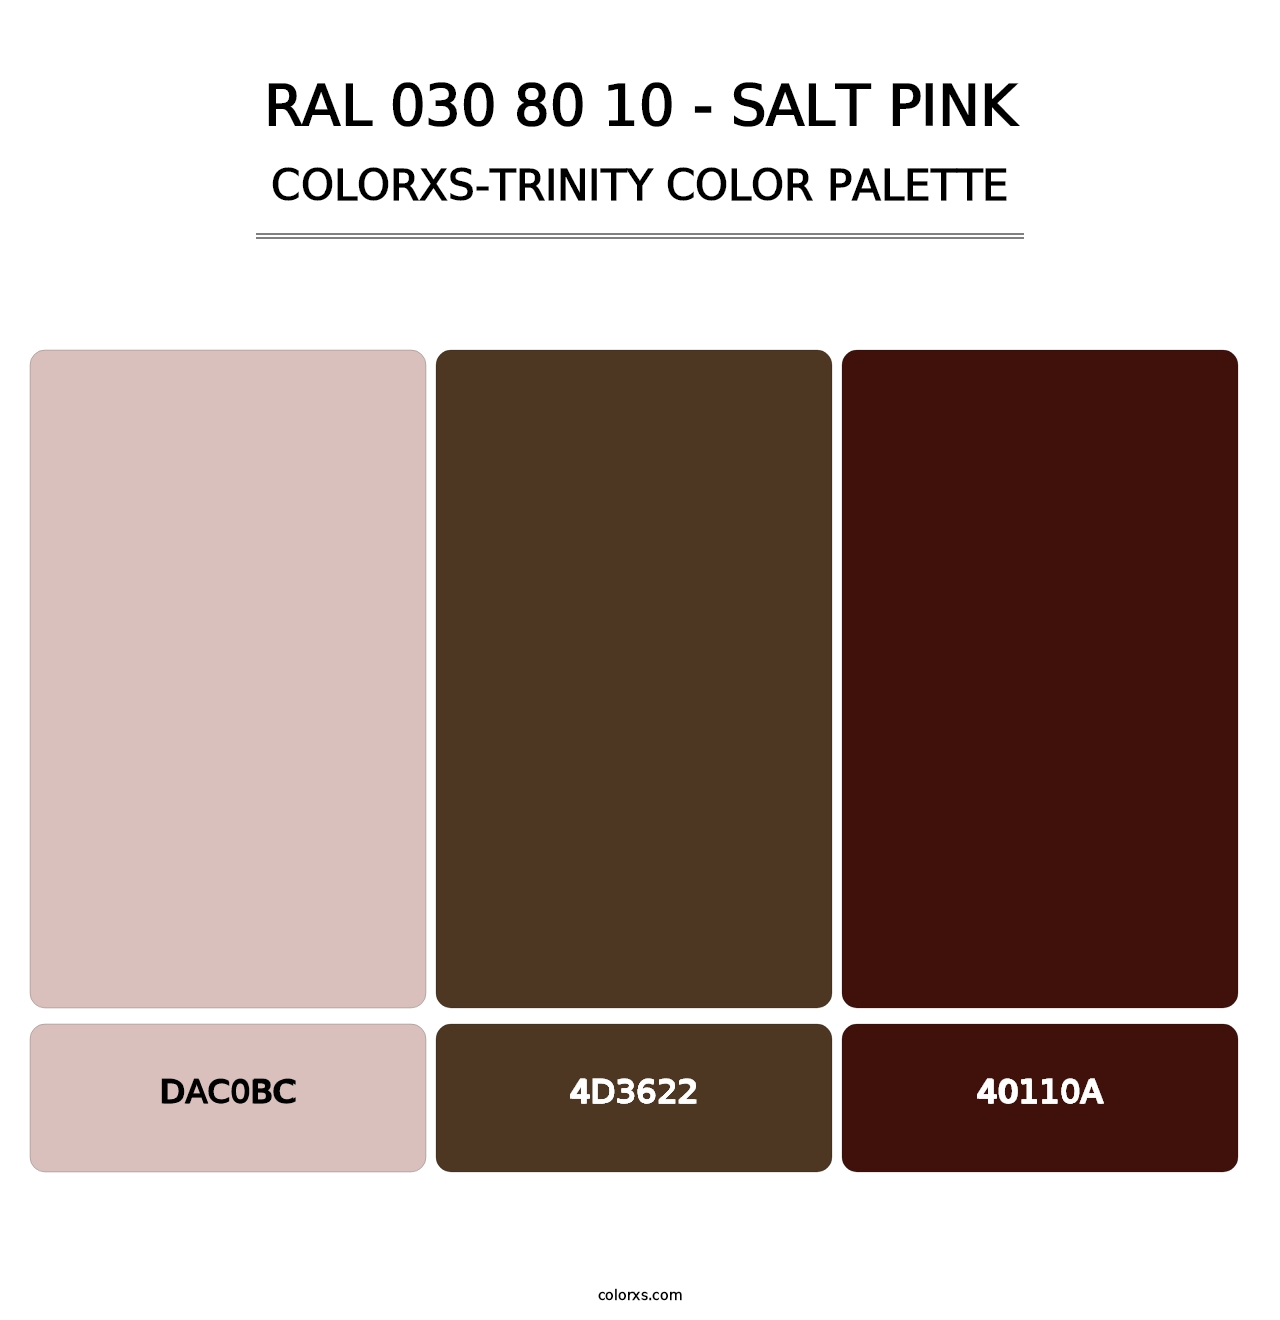 RAL 030 80 10 - Salt Pink - Colorxs Trinity Palette